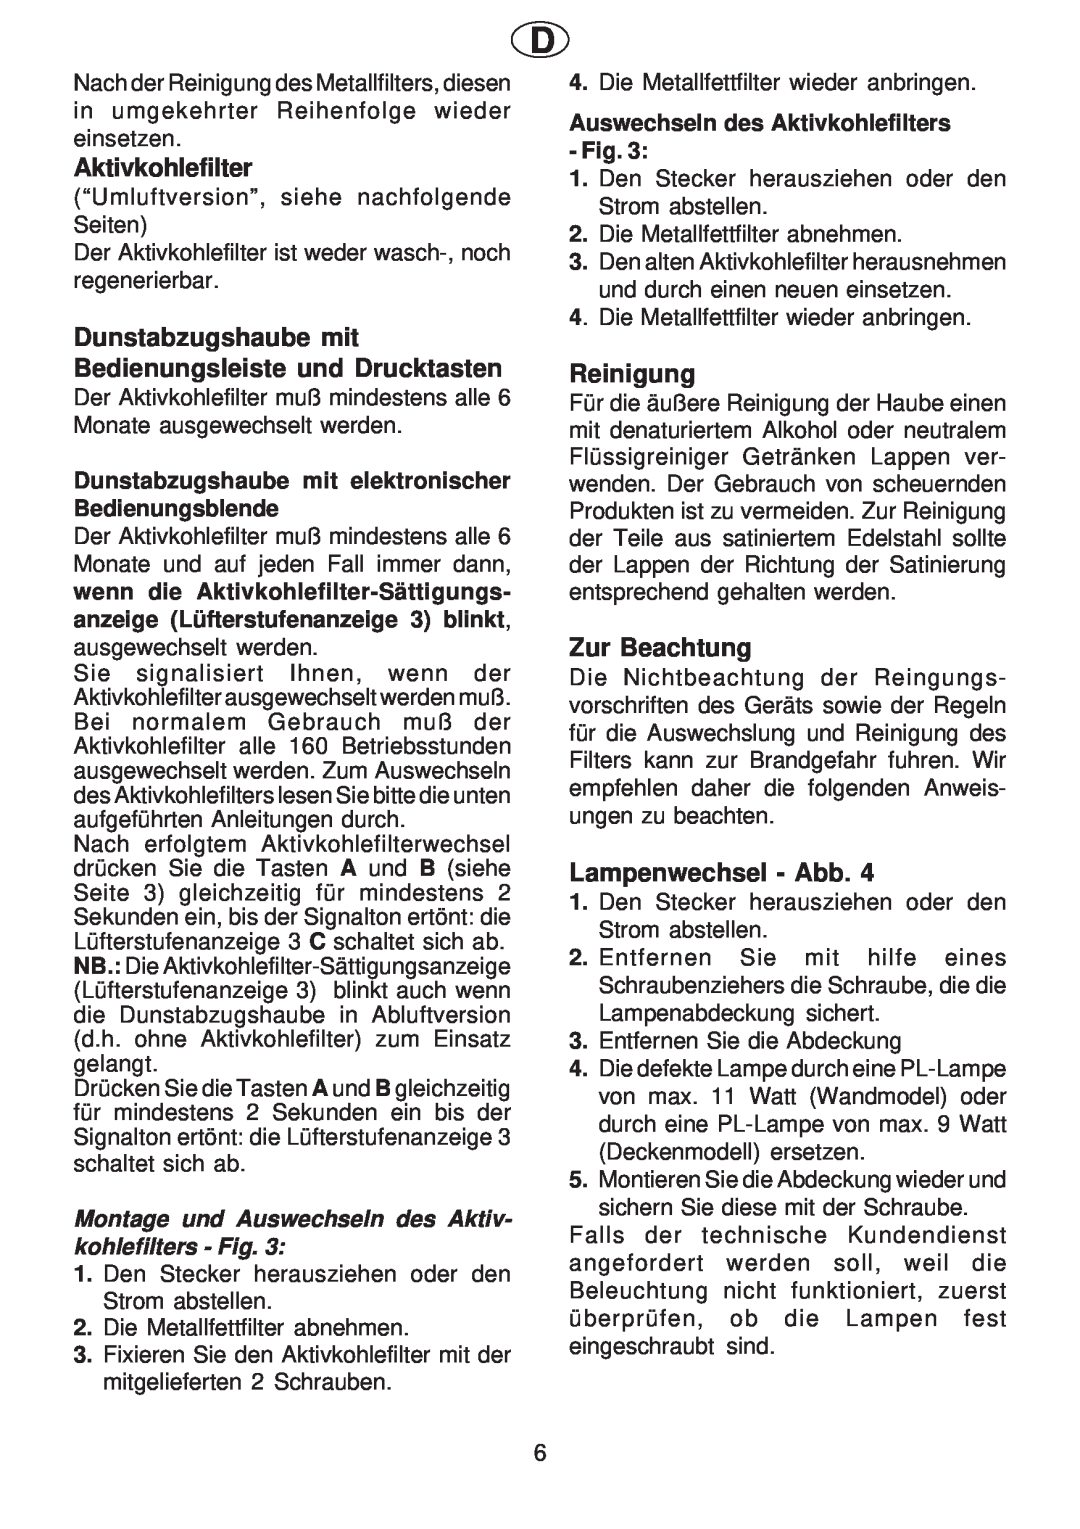 Smeg KSEIL90X1 manual Reinigung, Zur Beachtung, Lampenwechsel - Abb, Auswechseln des Aktivkohlefilters - Fig 